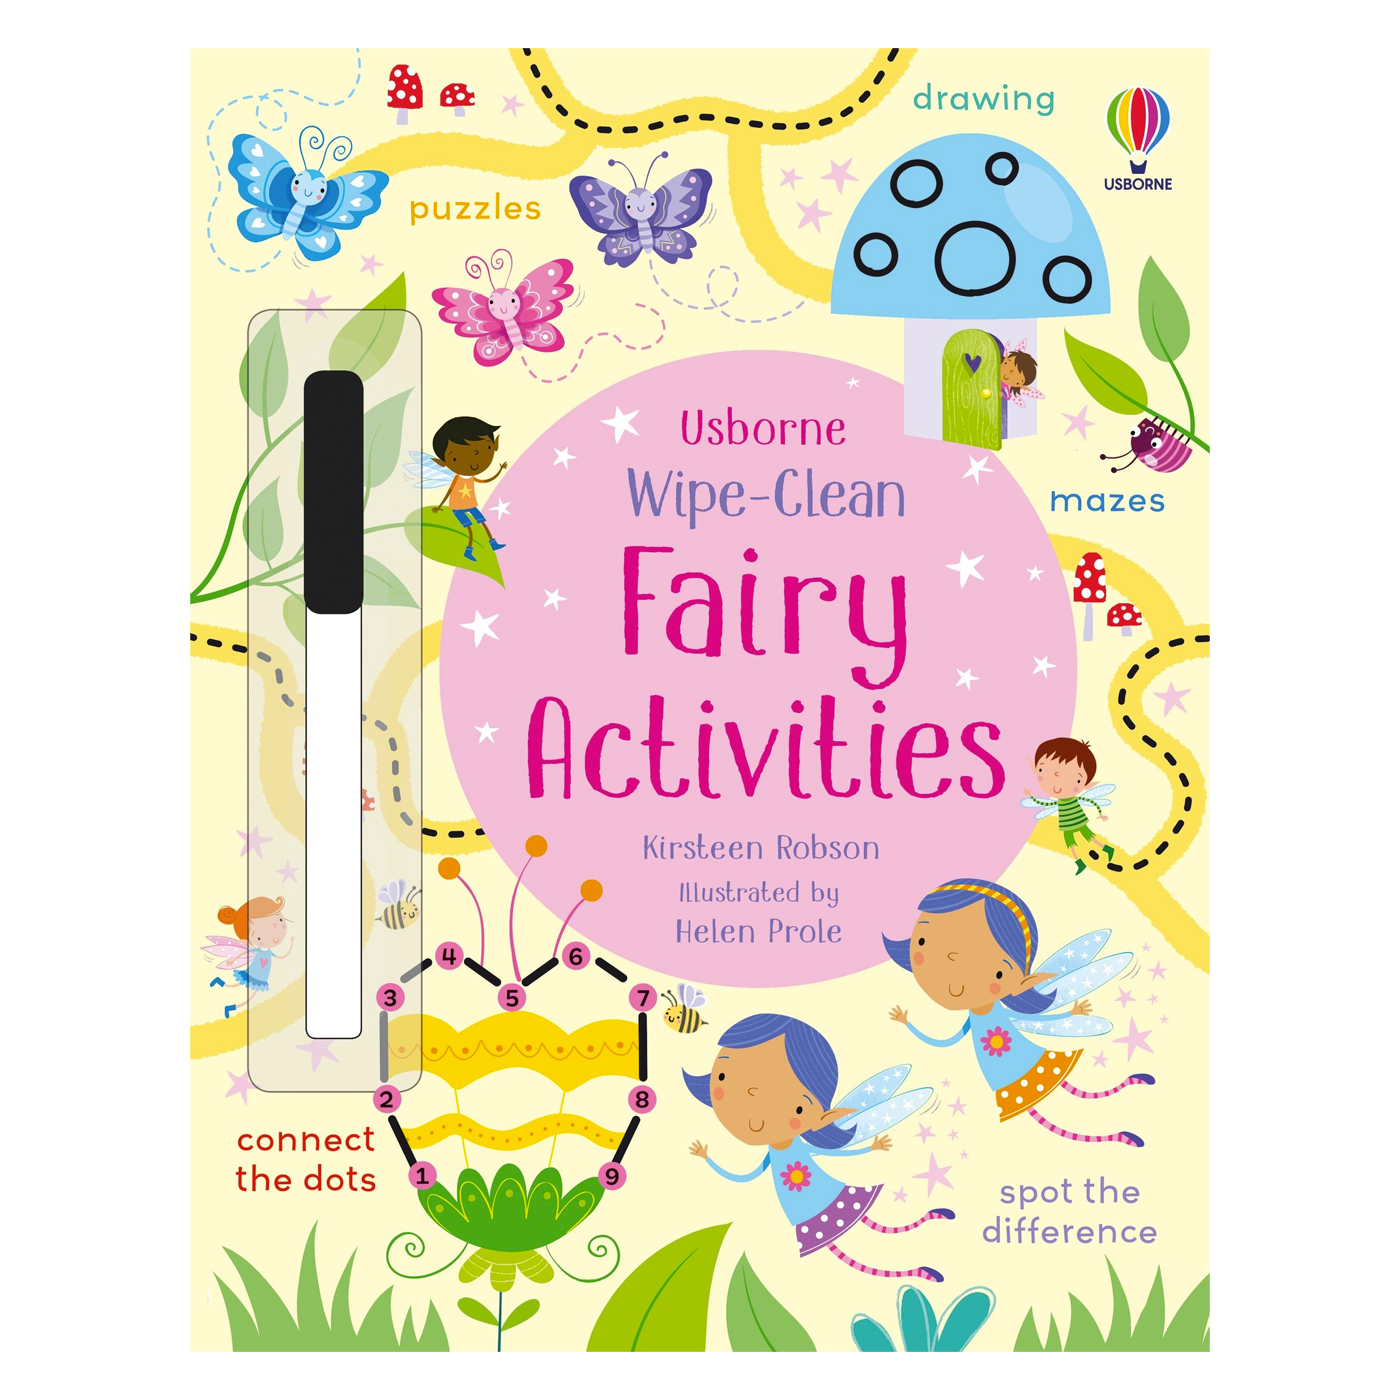 USBORNE Wipe-Clean Fairy Activities